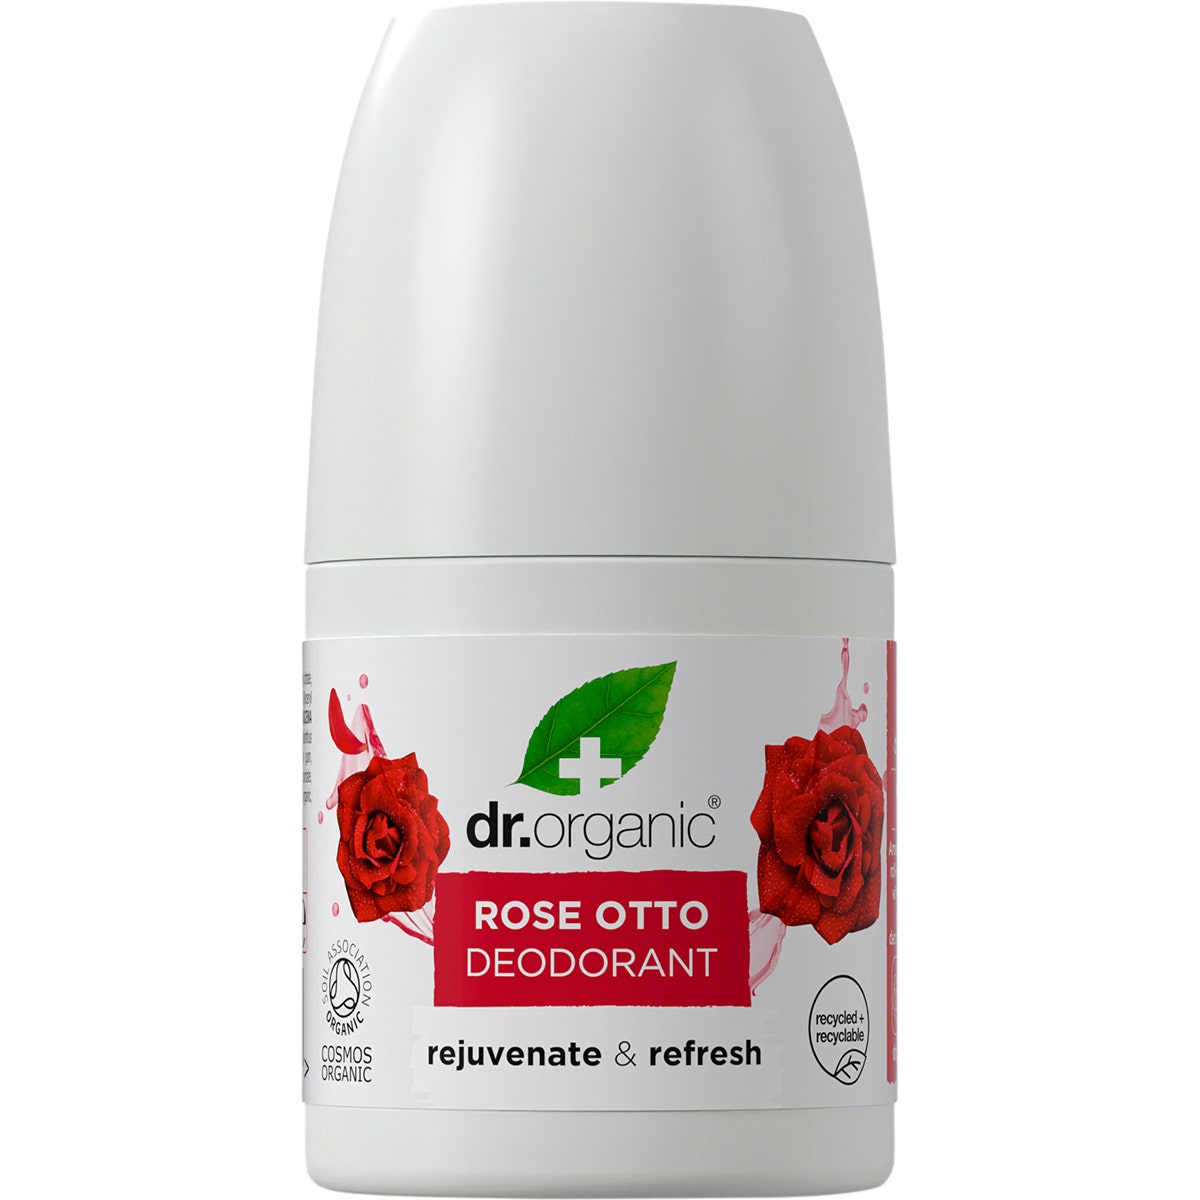 Dr. Organic Organic Deodorant